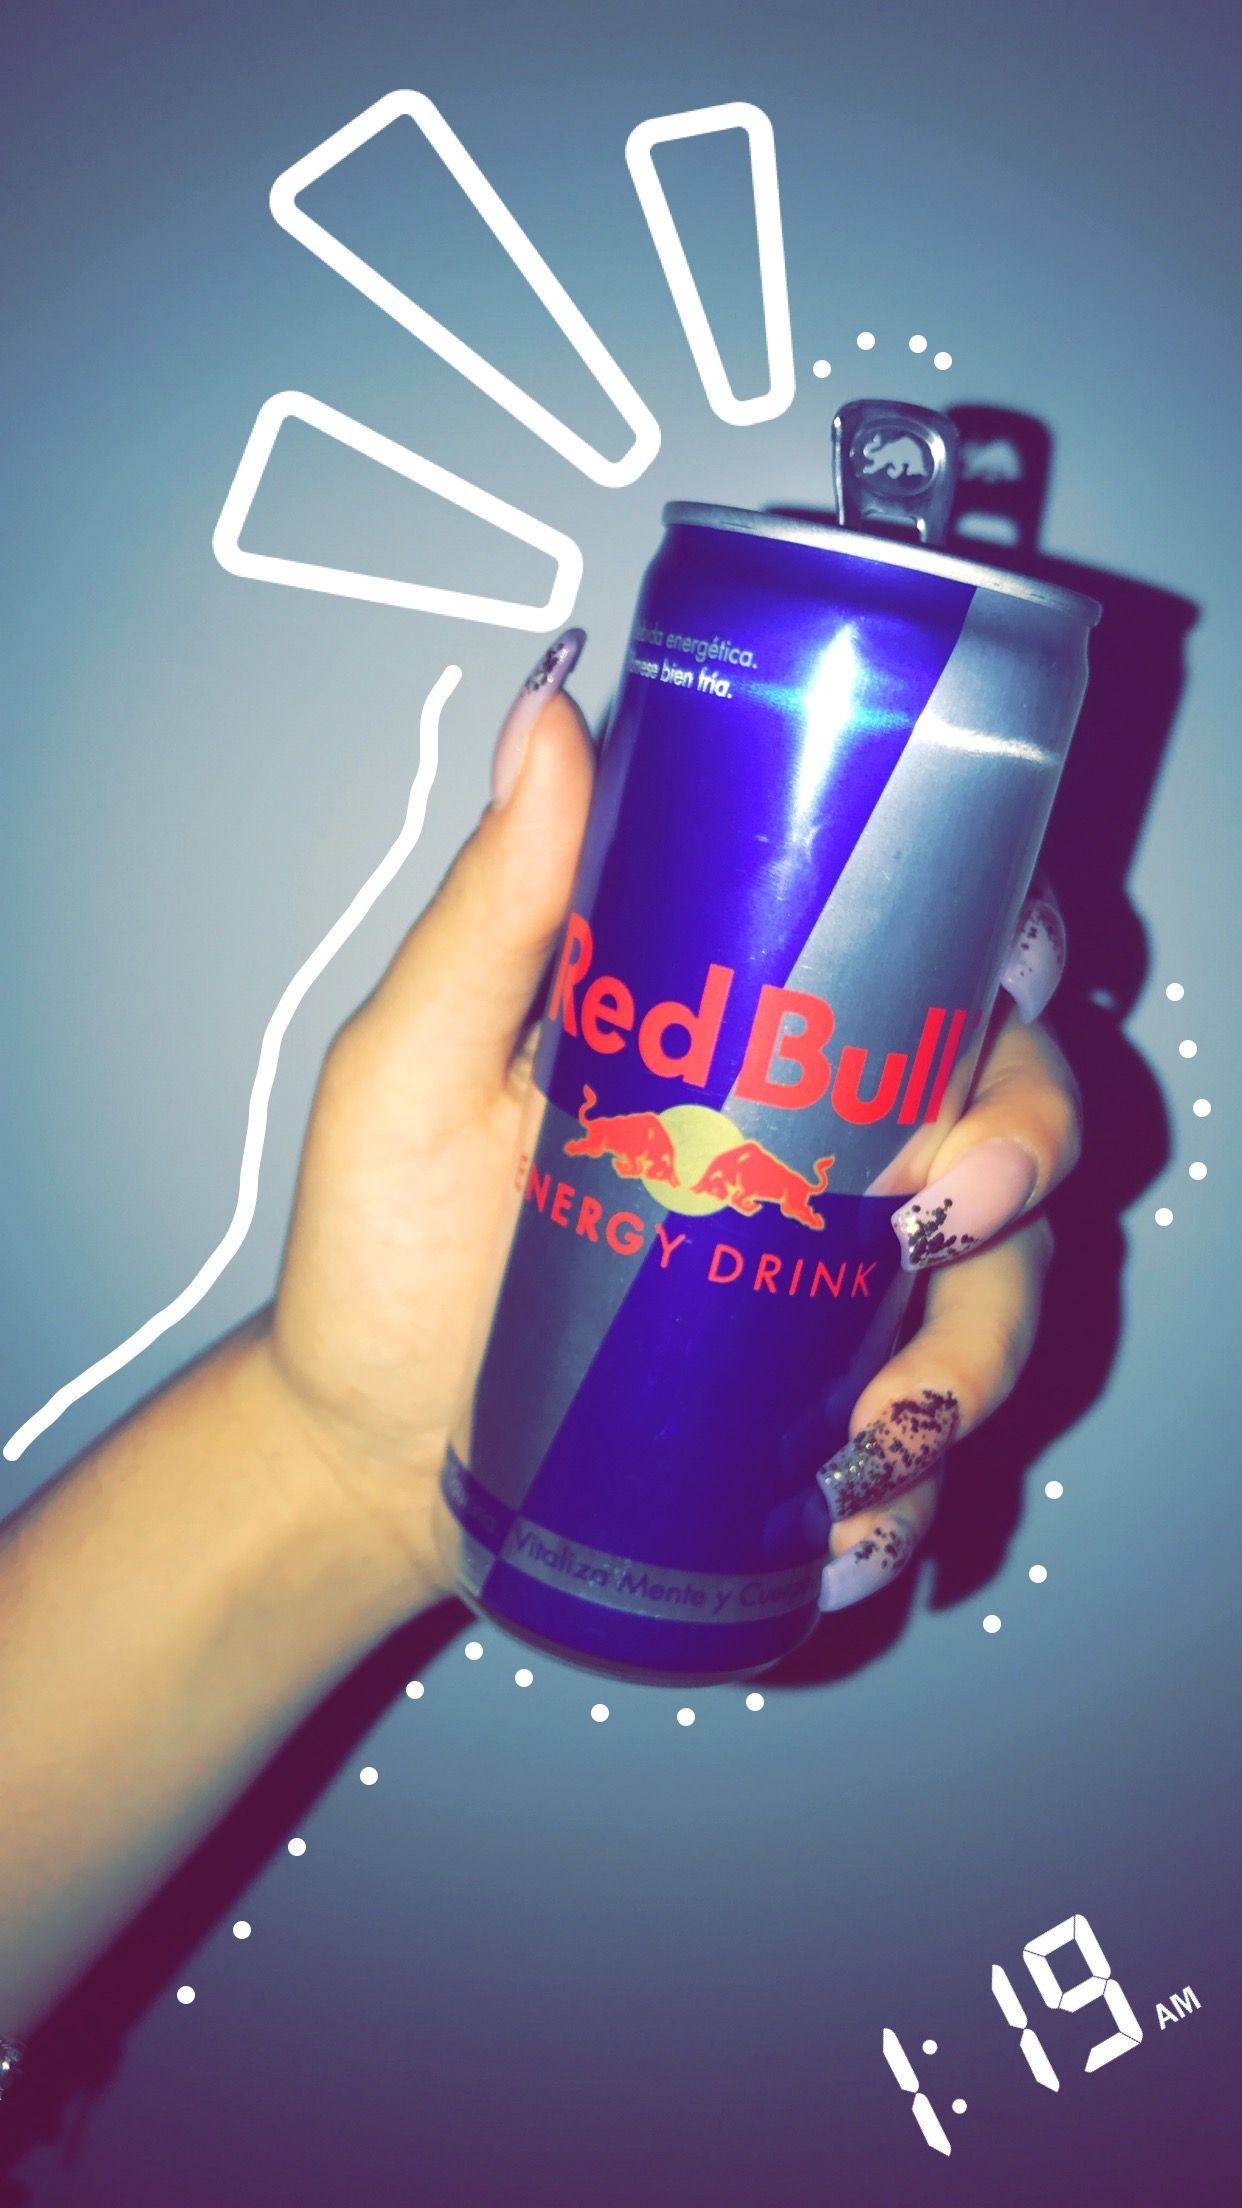  Red Bull Hintergrundbild 1242x2208. Red Bull. Tumblr. Instagram foto ideen, Teenager fotografie, Instagram foto